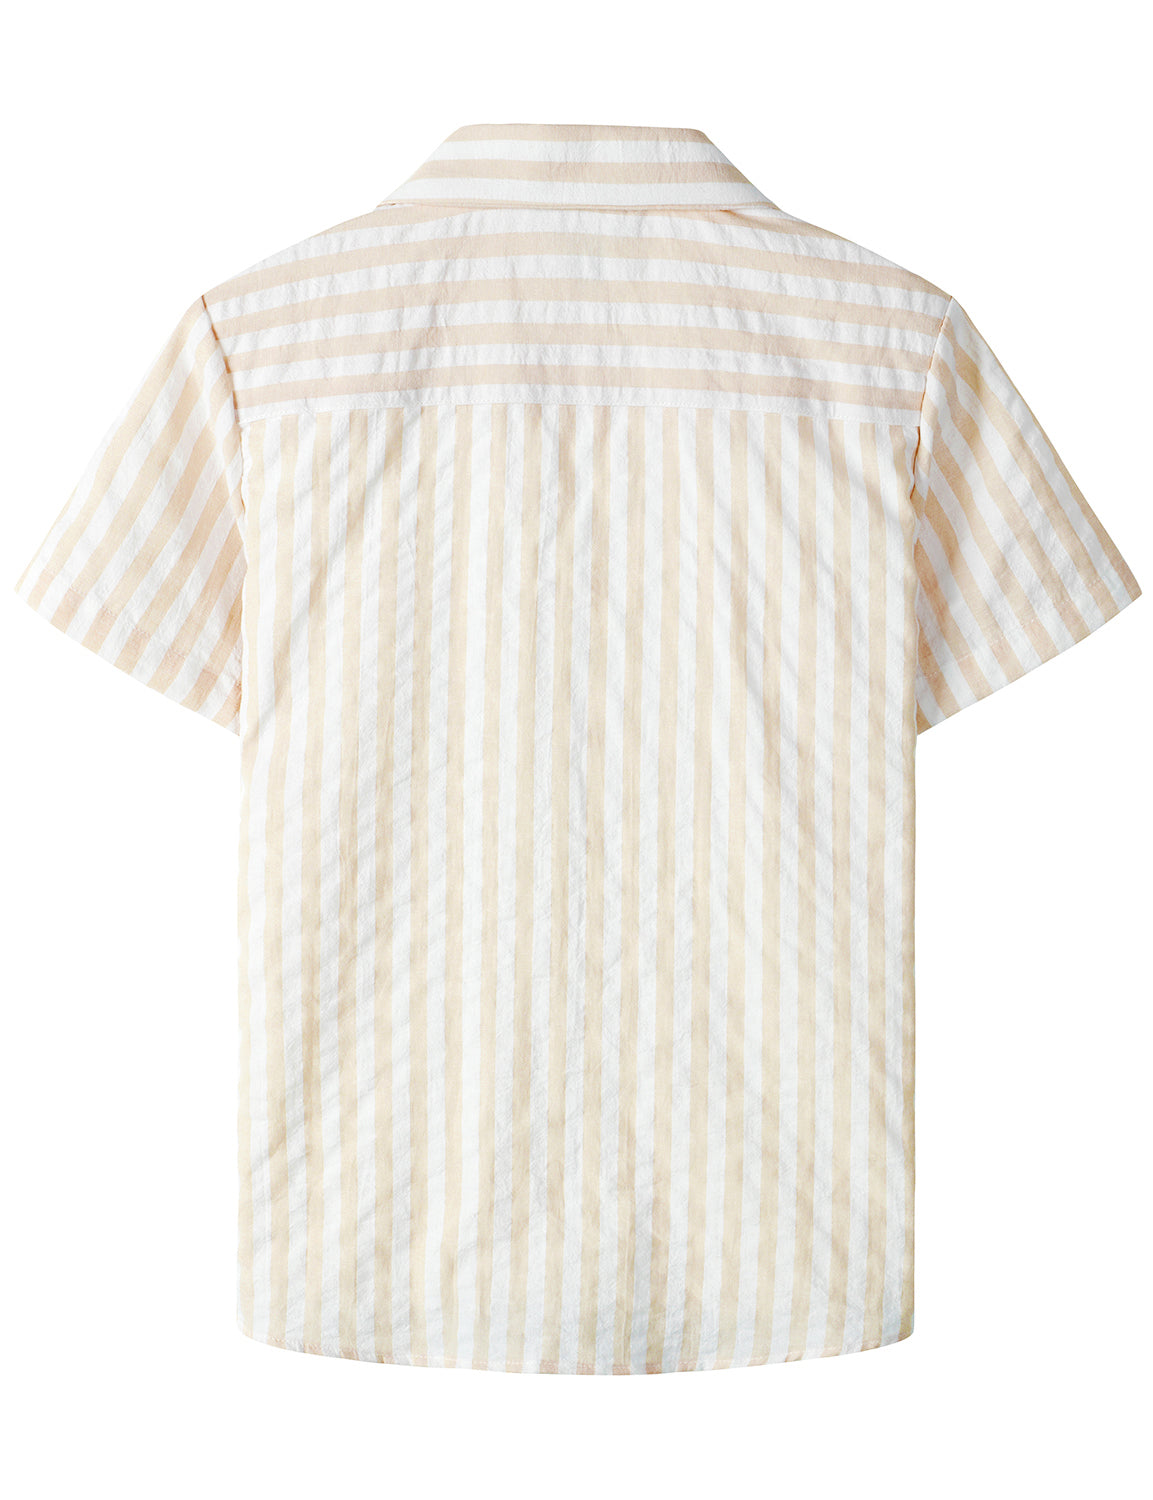 JOGAL Big Boys Cuban Collar Button Down Shirt Short Sleeve Casual Hawaiian Shirt Summer Beach Striped Tops for 6-14 Years Old